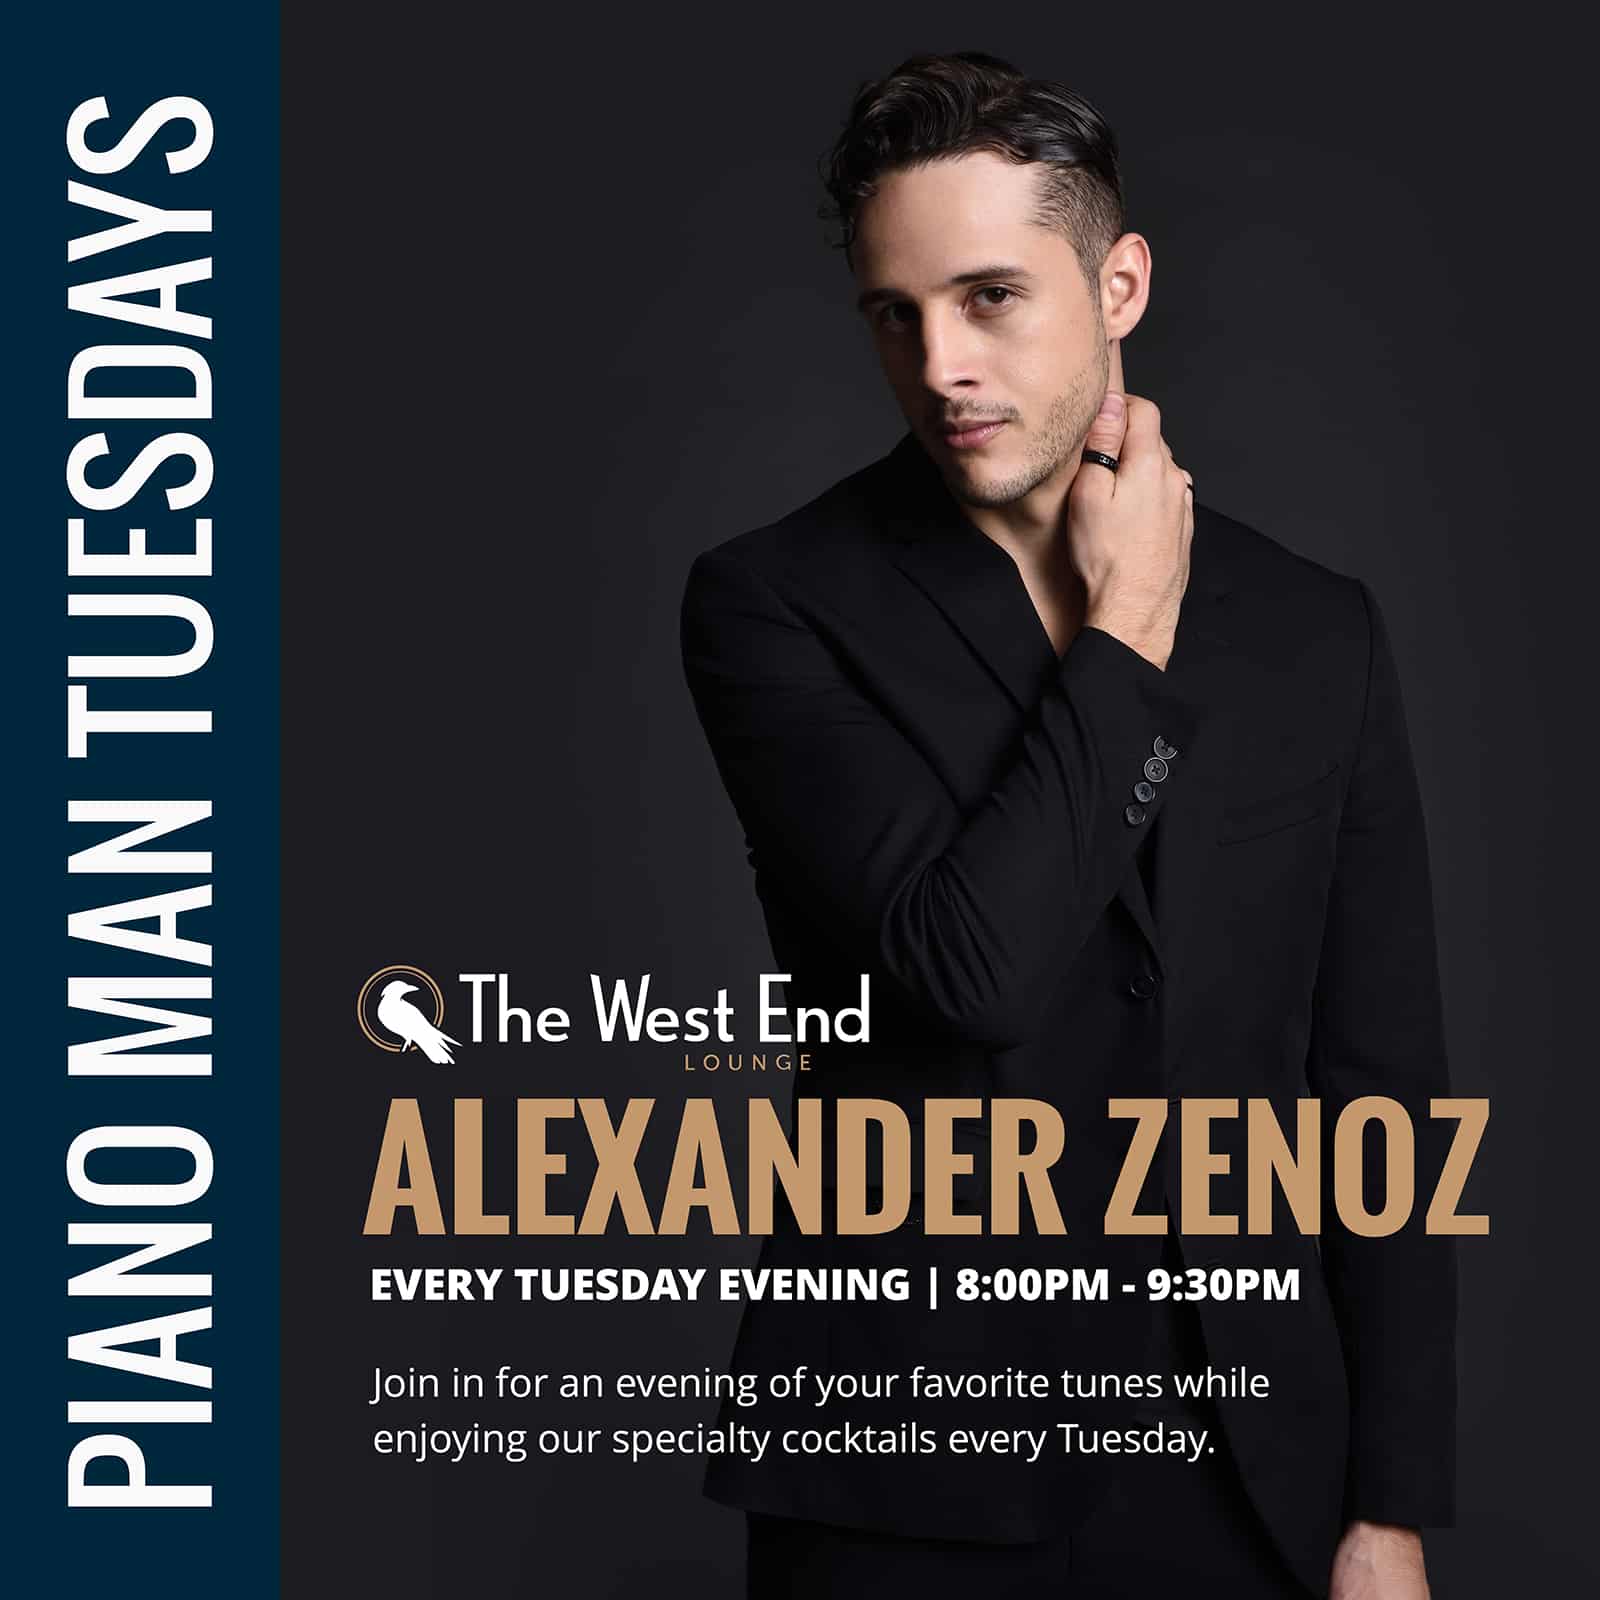 Piano Man Tuesdays | Alexander Zenoz